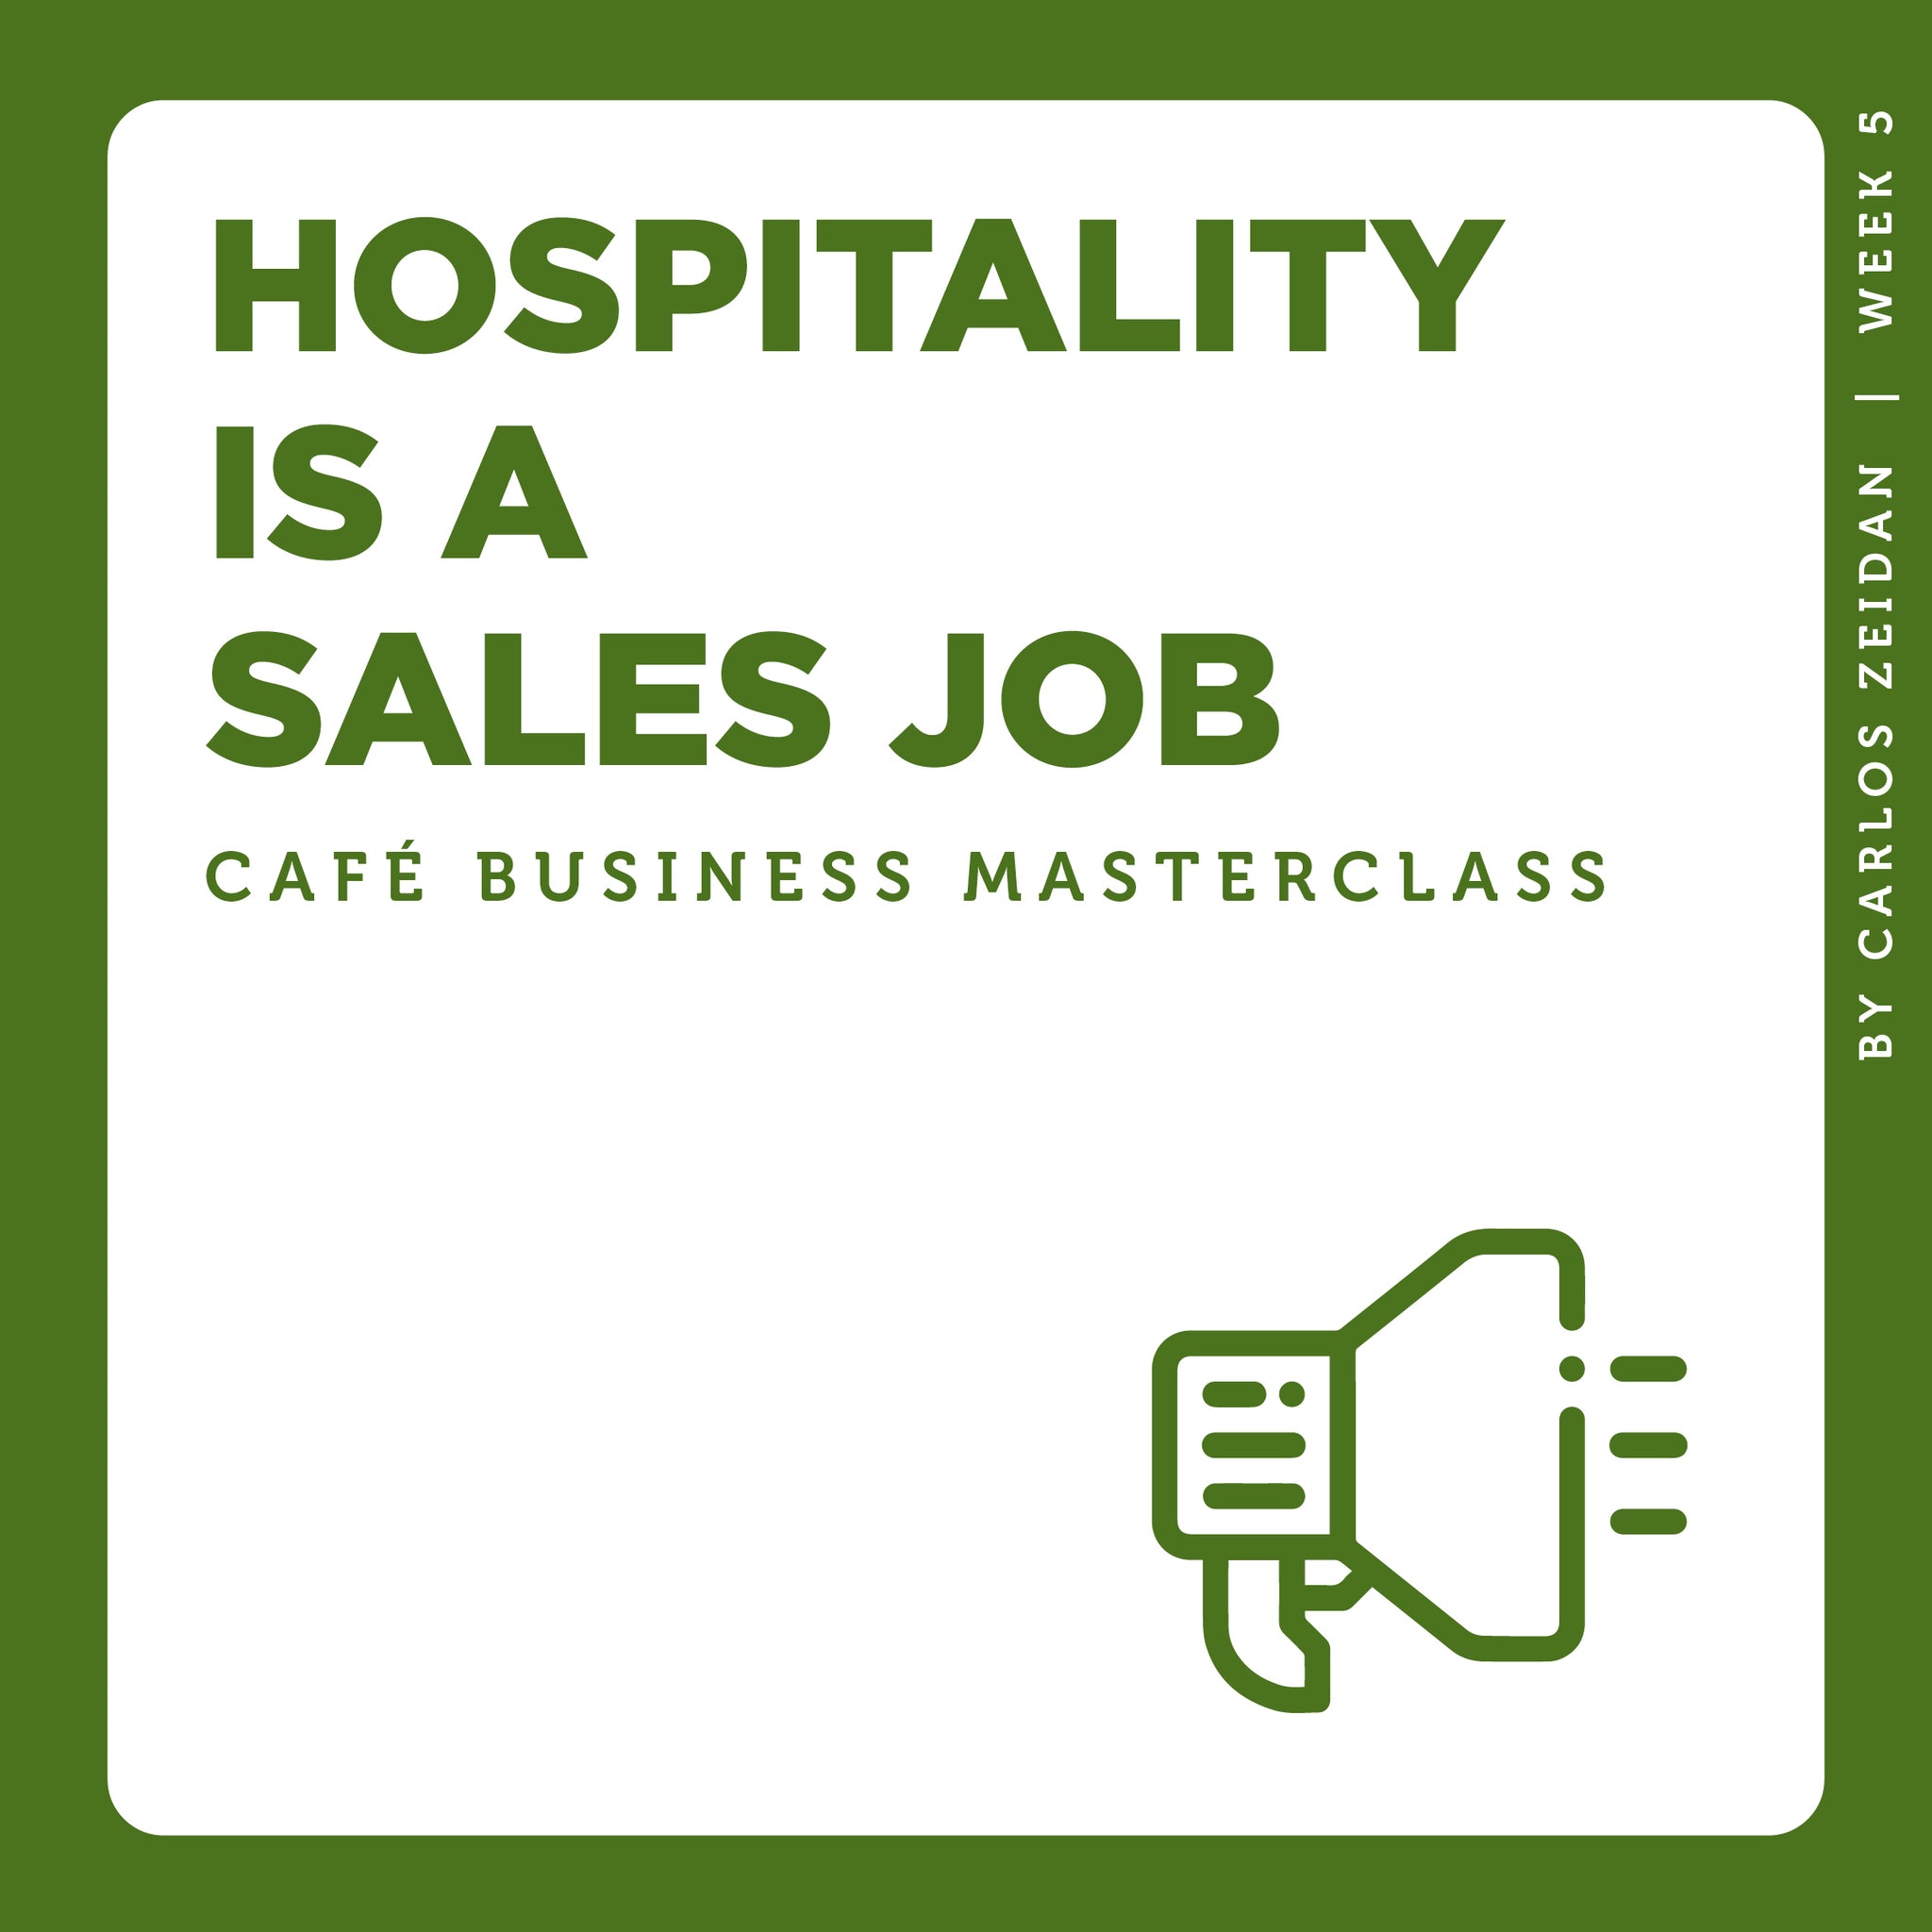 Café Business Masterclass: Hospitality is a Sales Job